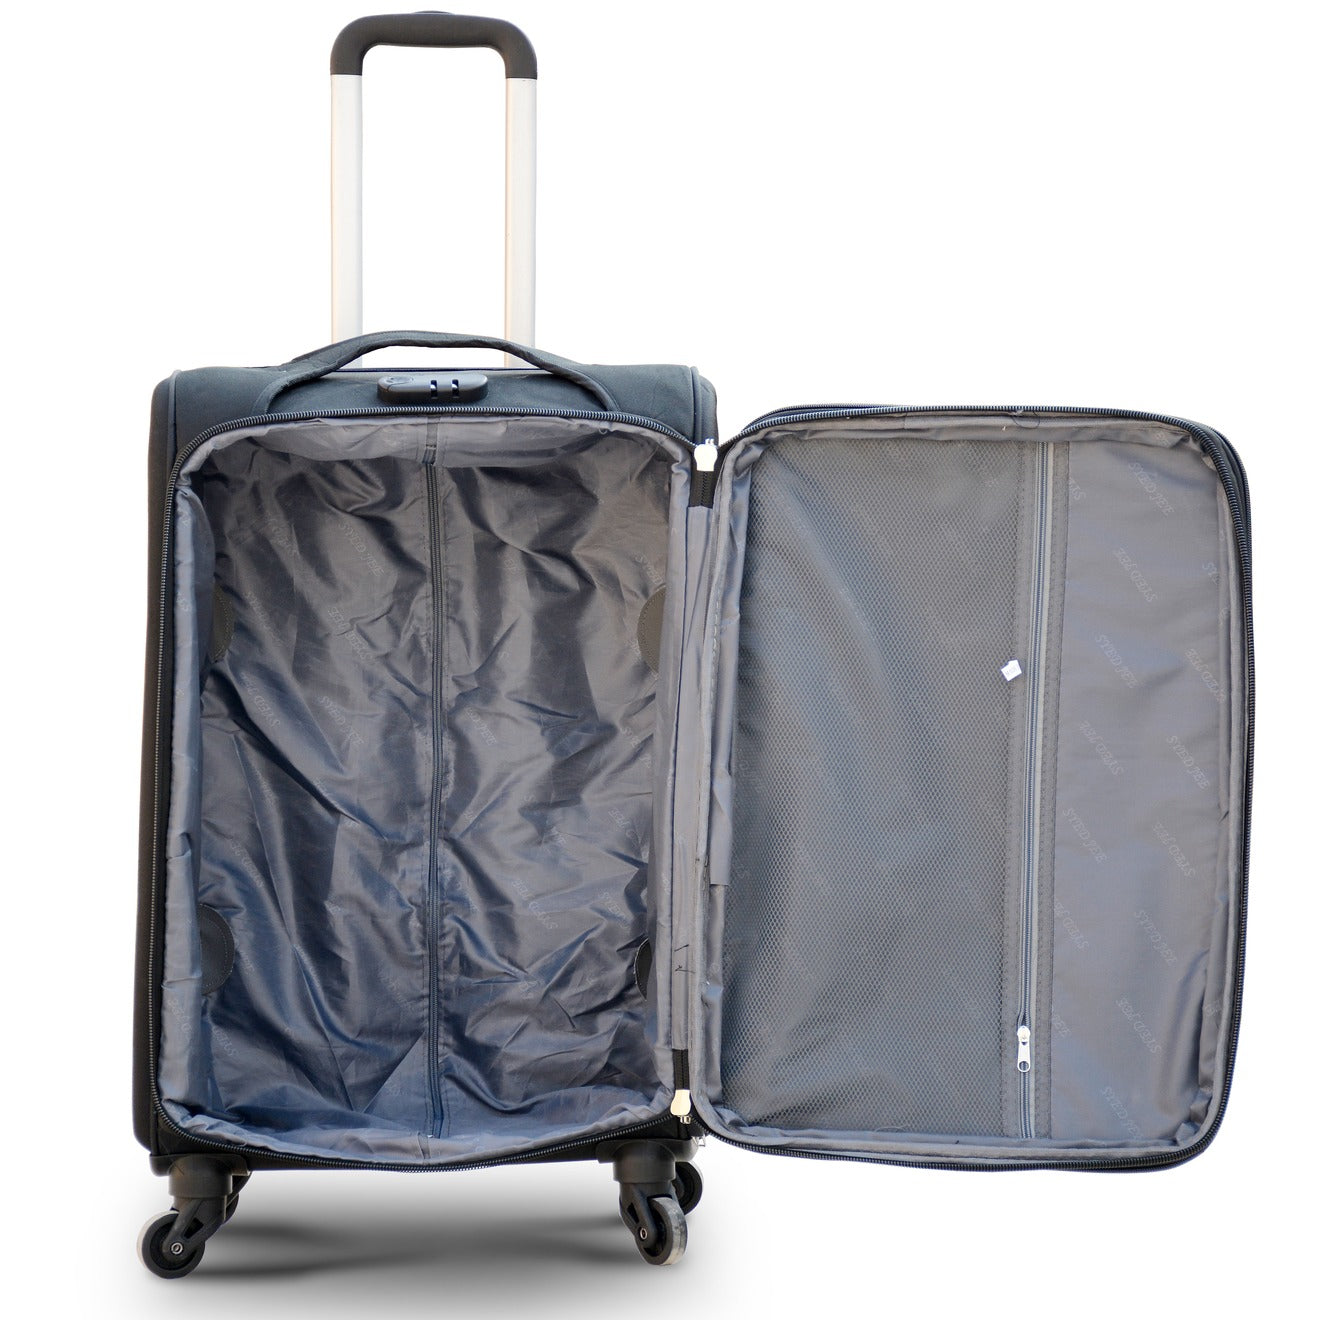 32" Black Colour SJ JIAN 4 Wheel Luggage Lightweight Soft Material Trolley Bag